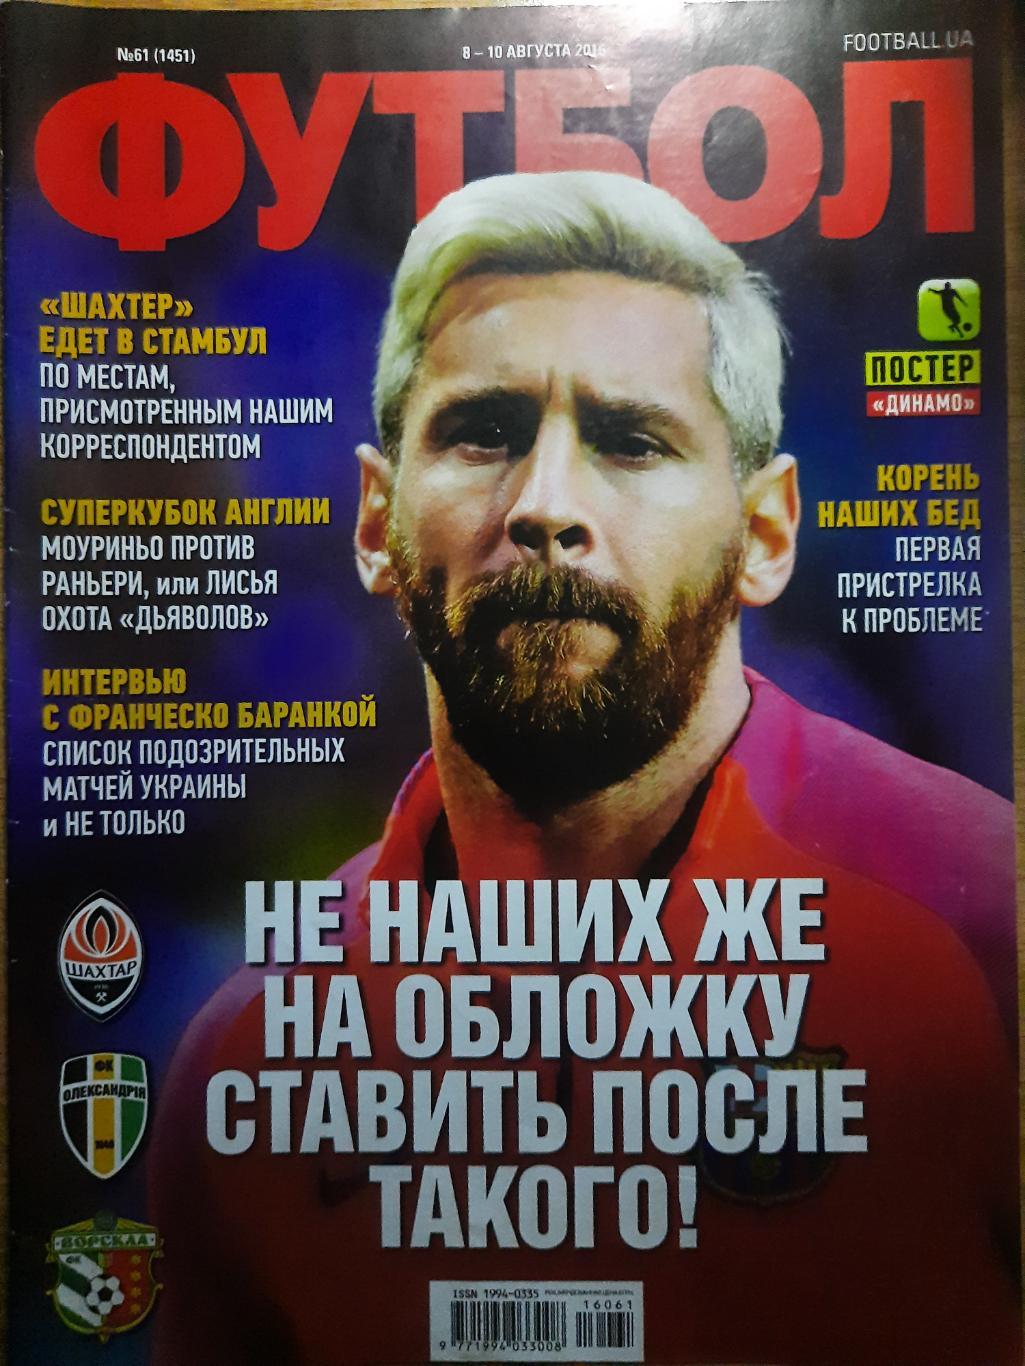 постер из еженедельника Футбол #61 2016, Динамо К. 2